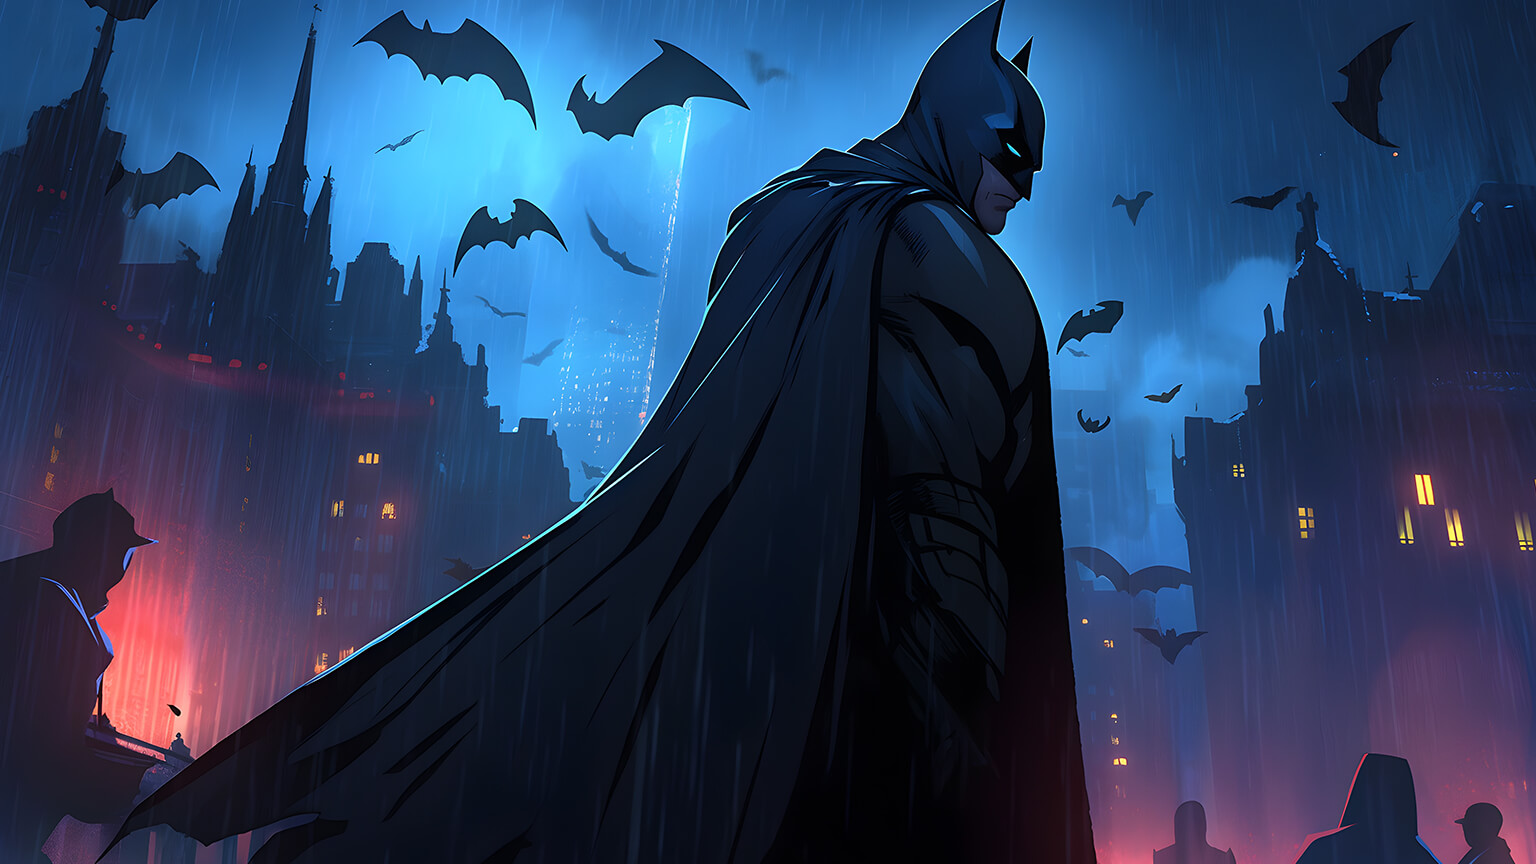 The Batman 4k Wallpapers - Top Ultra 4k The Batman Backgrounds Download